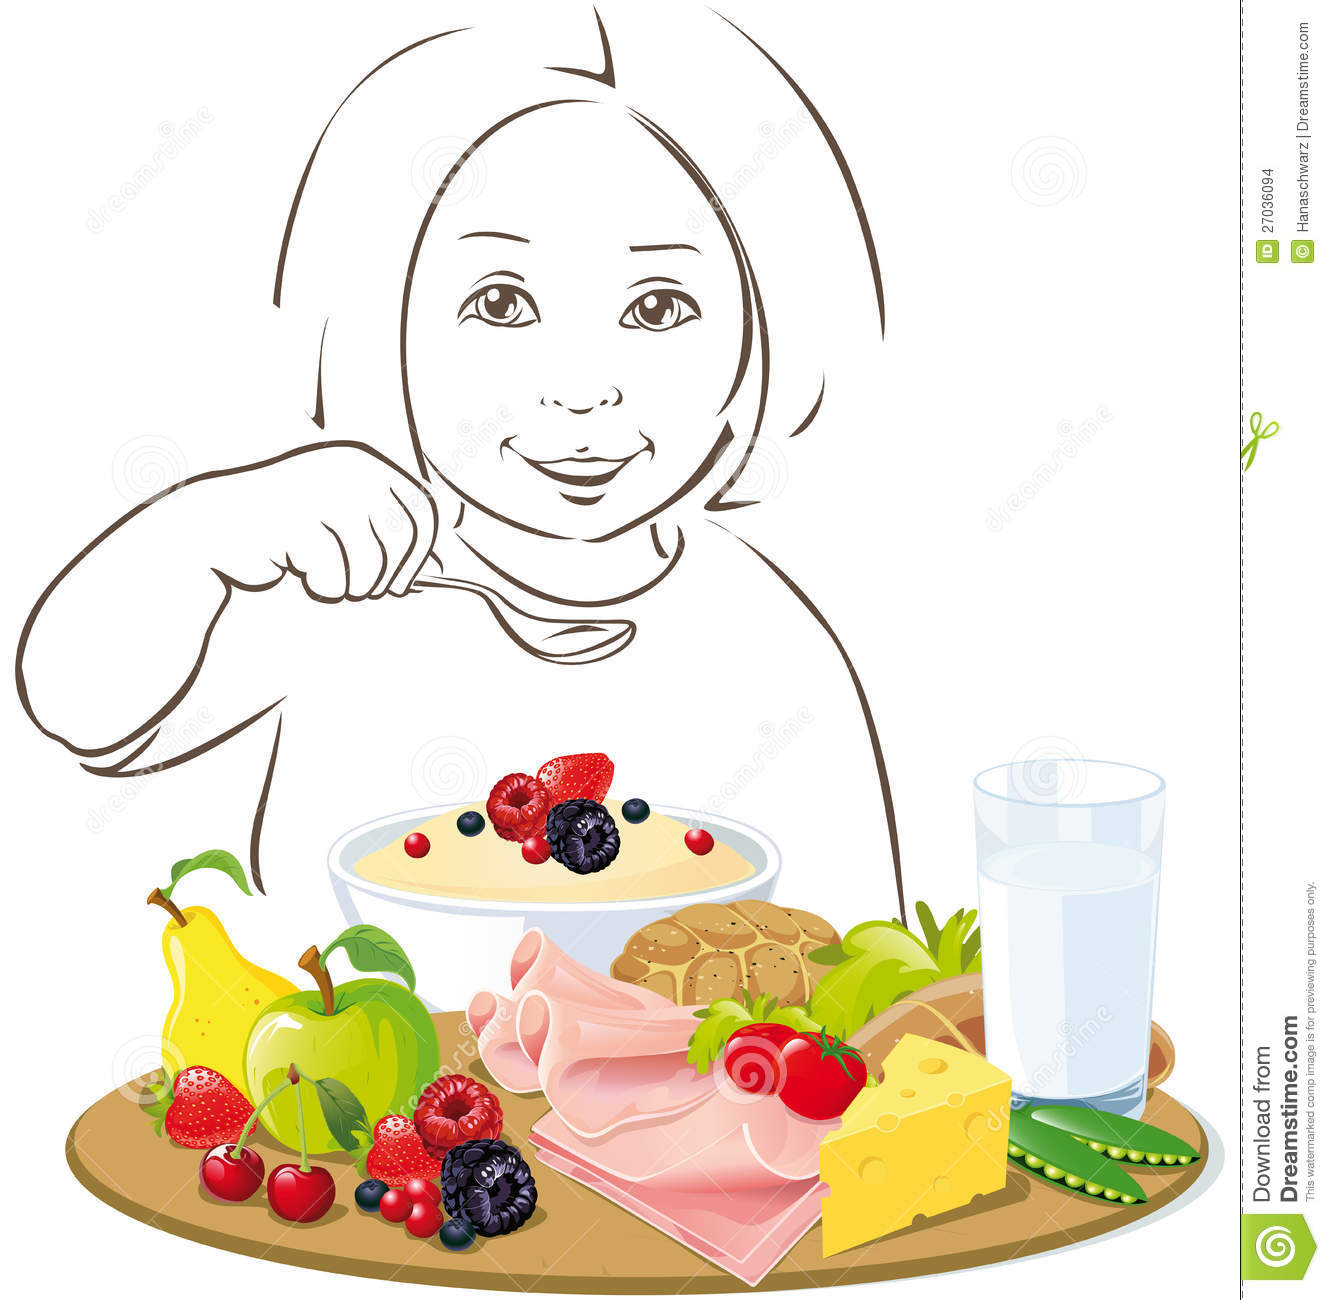 Healthy Eating Child   Illustration Stock Images   Image  27036094